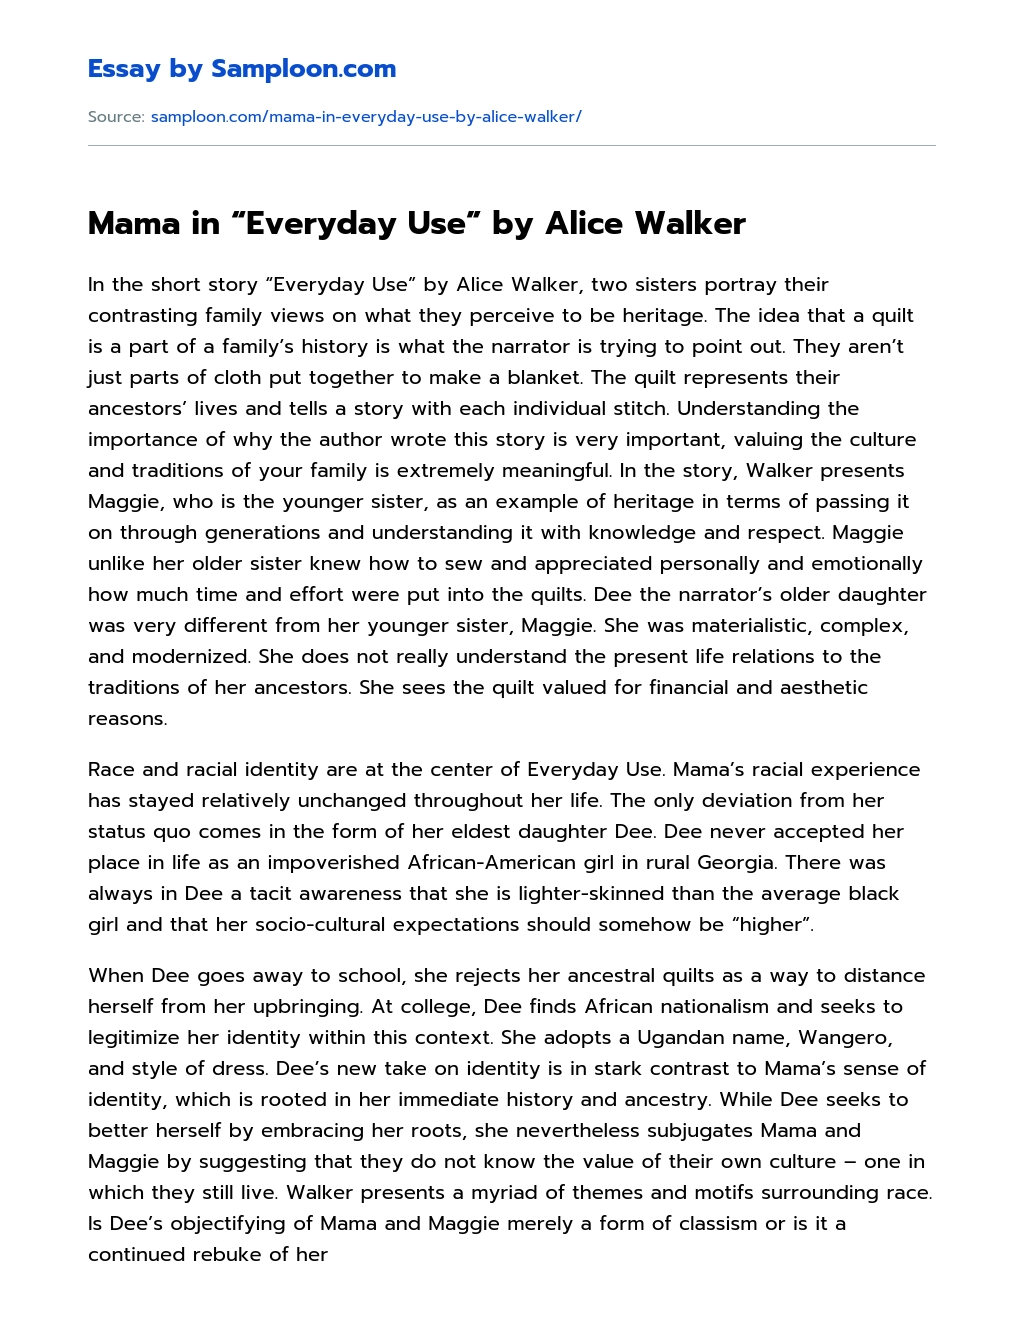 Mama in “Everyday Use” by Alice Walker Summary essay